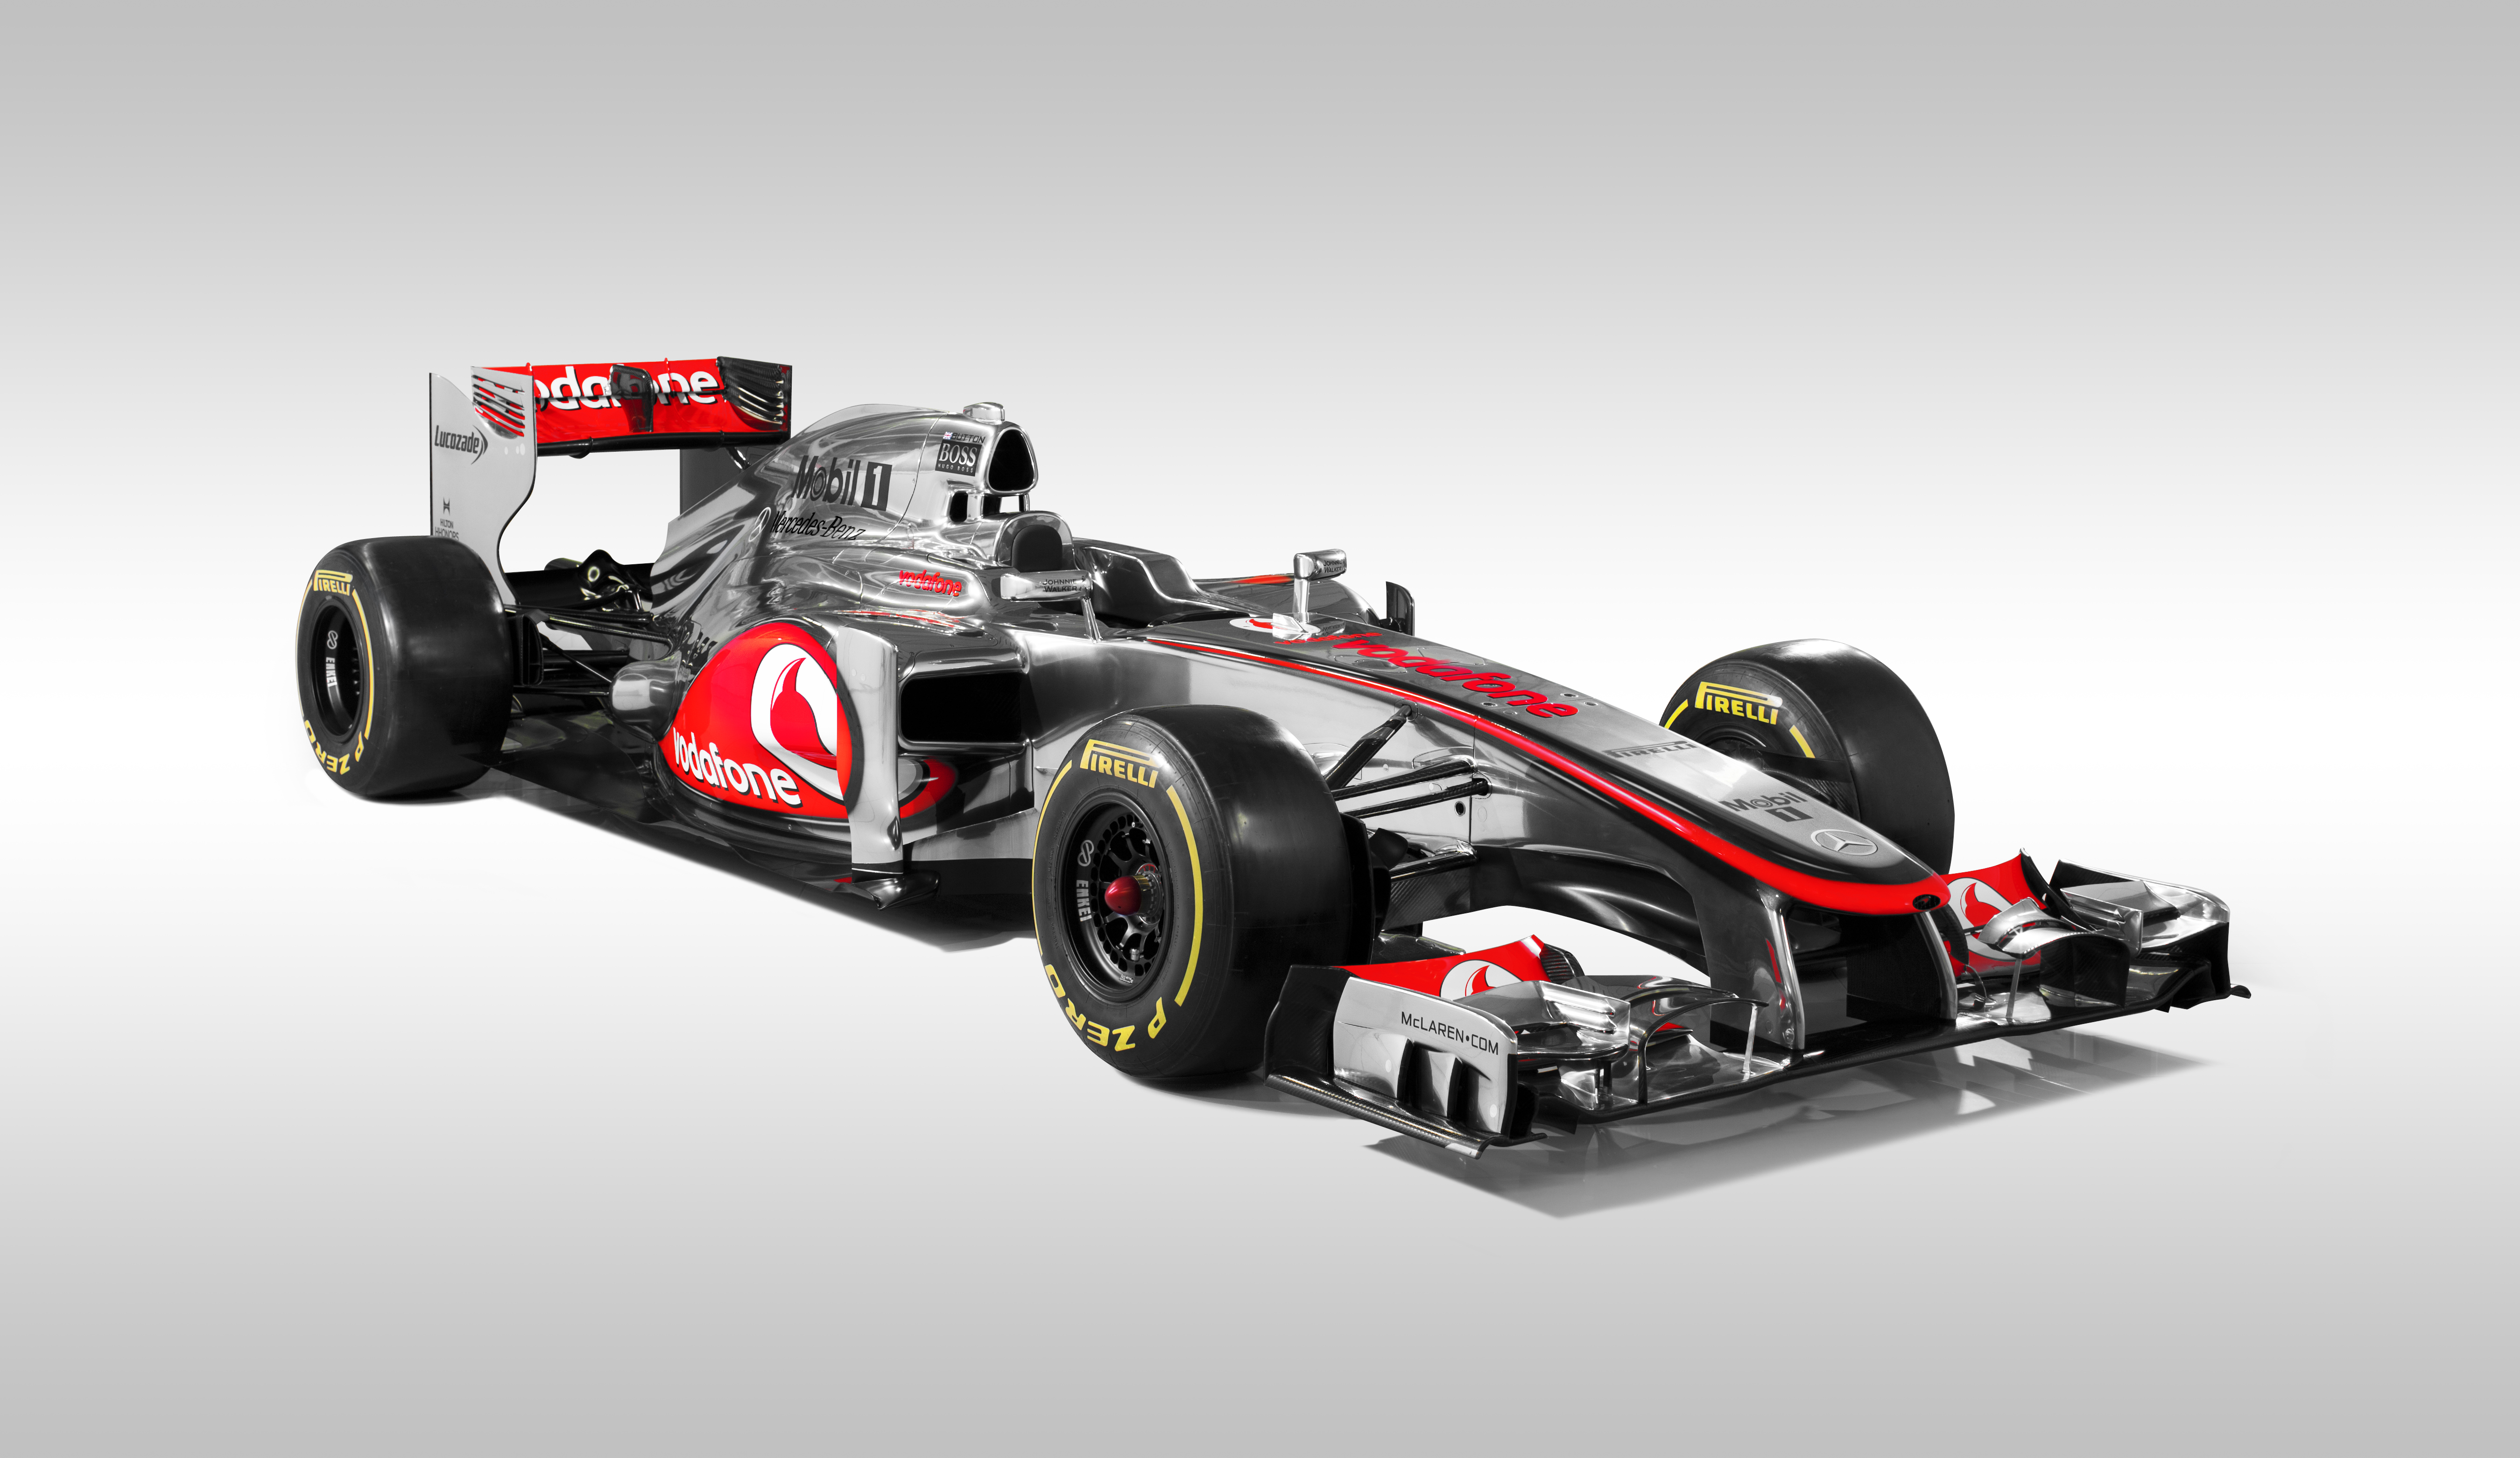 Formula 1 car. Макларен ф1 гоночный. Макларен формула 1 2012. Макларен ф1 Болид. MCLAREN f1 Болид.